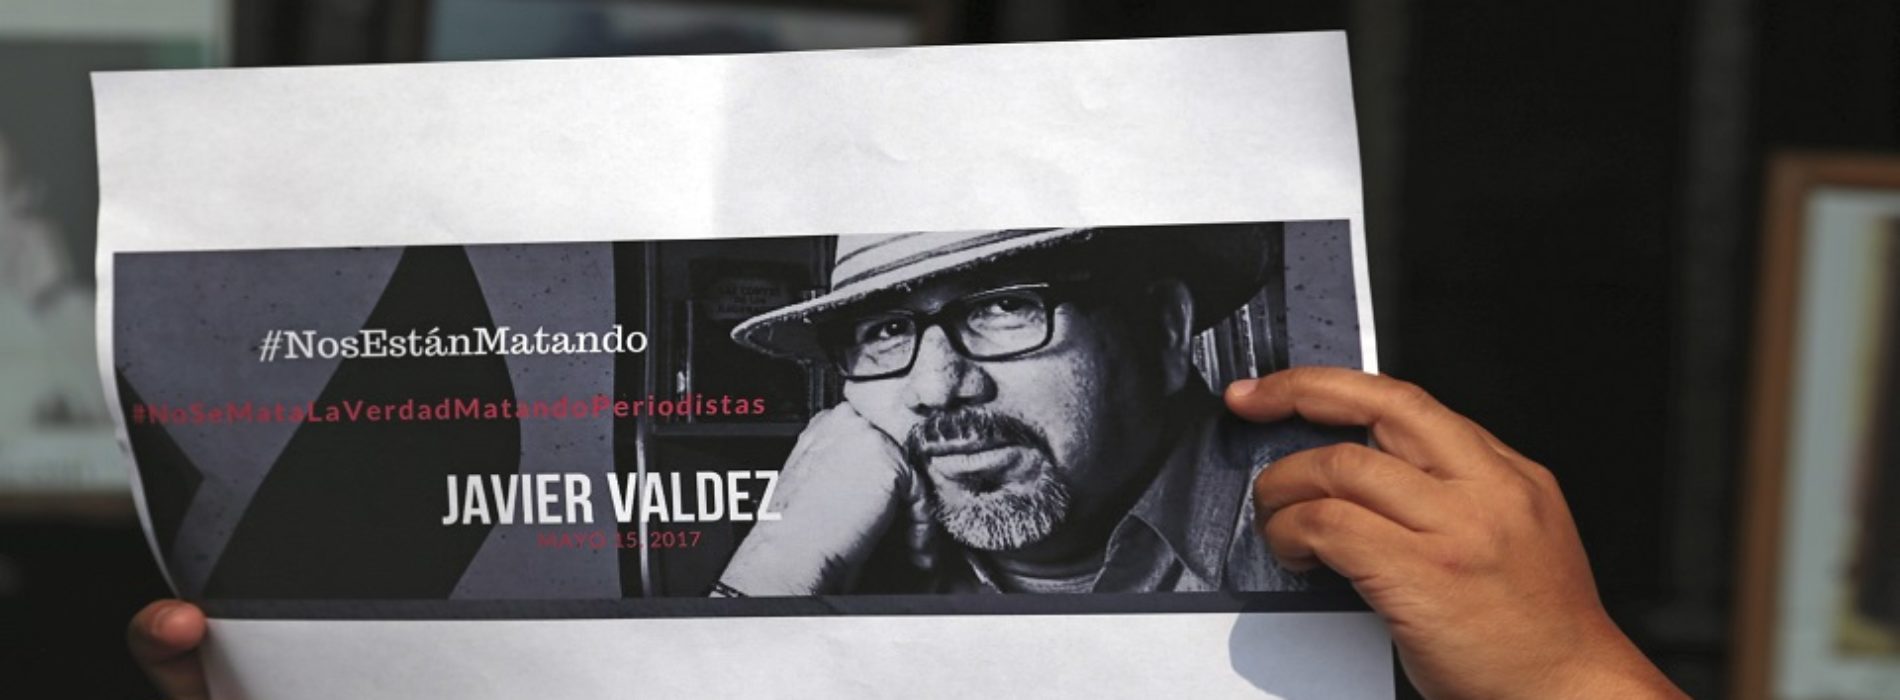 Detienen a presunto responsable del asesinato del periodista
Javier Valdez